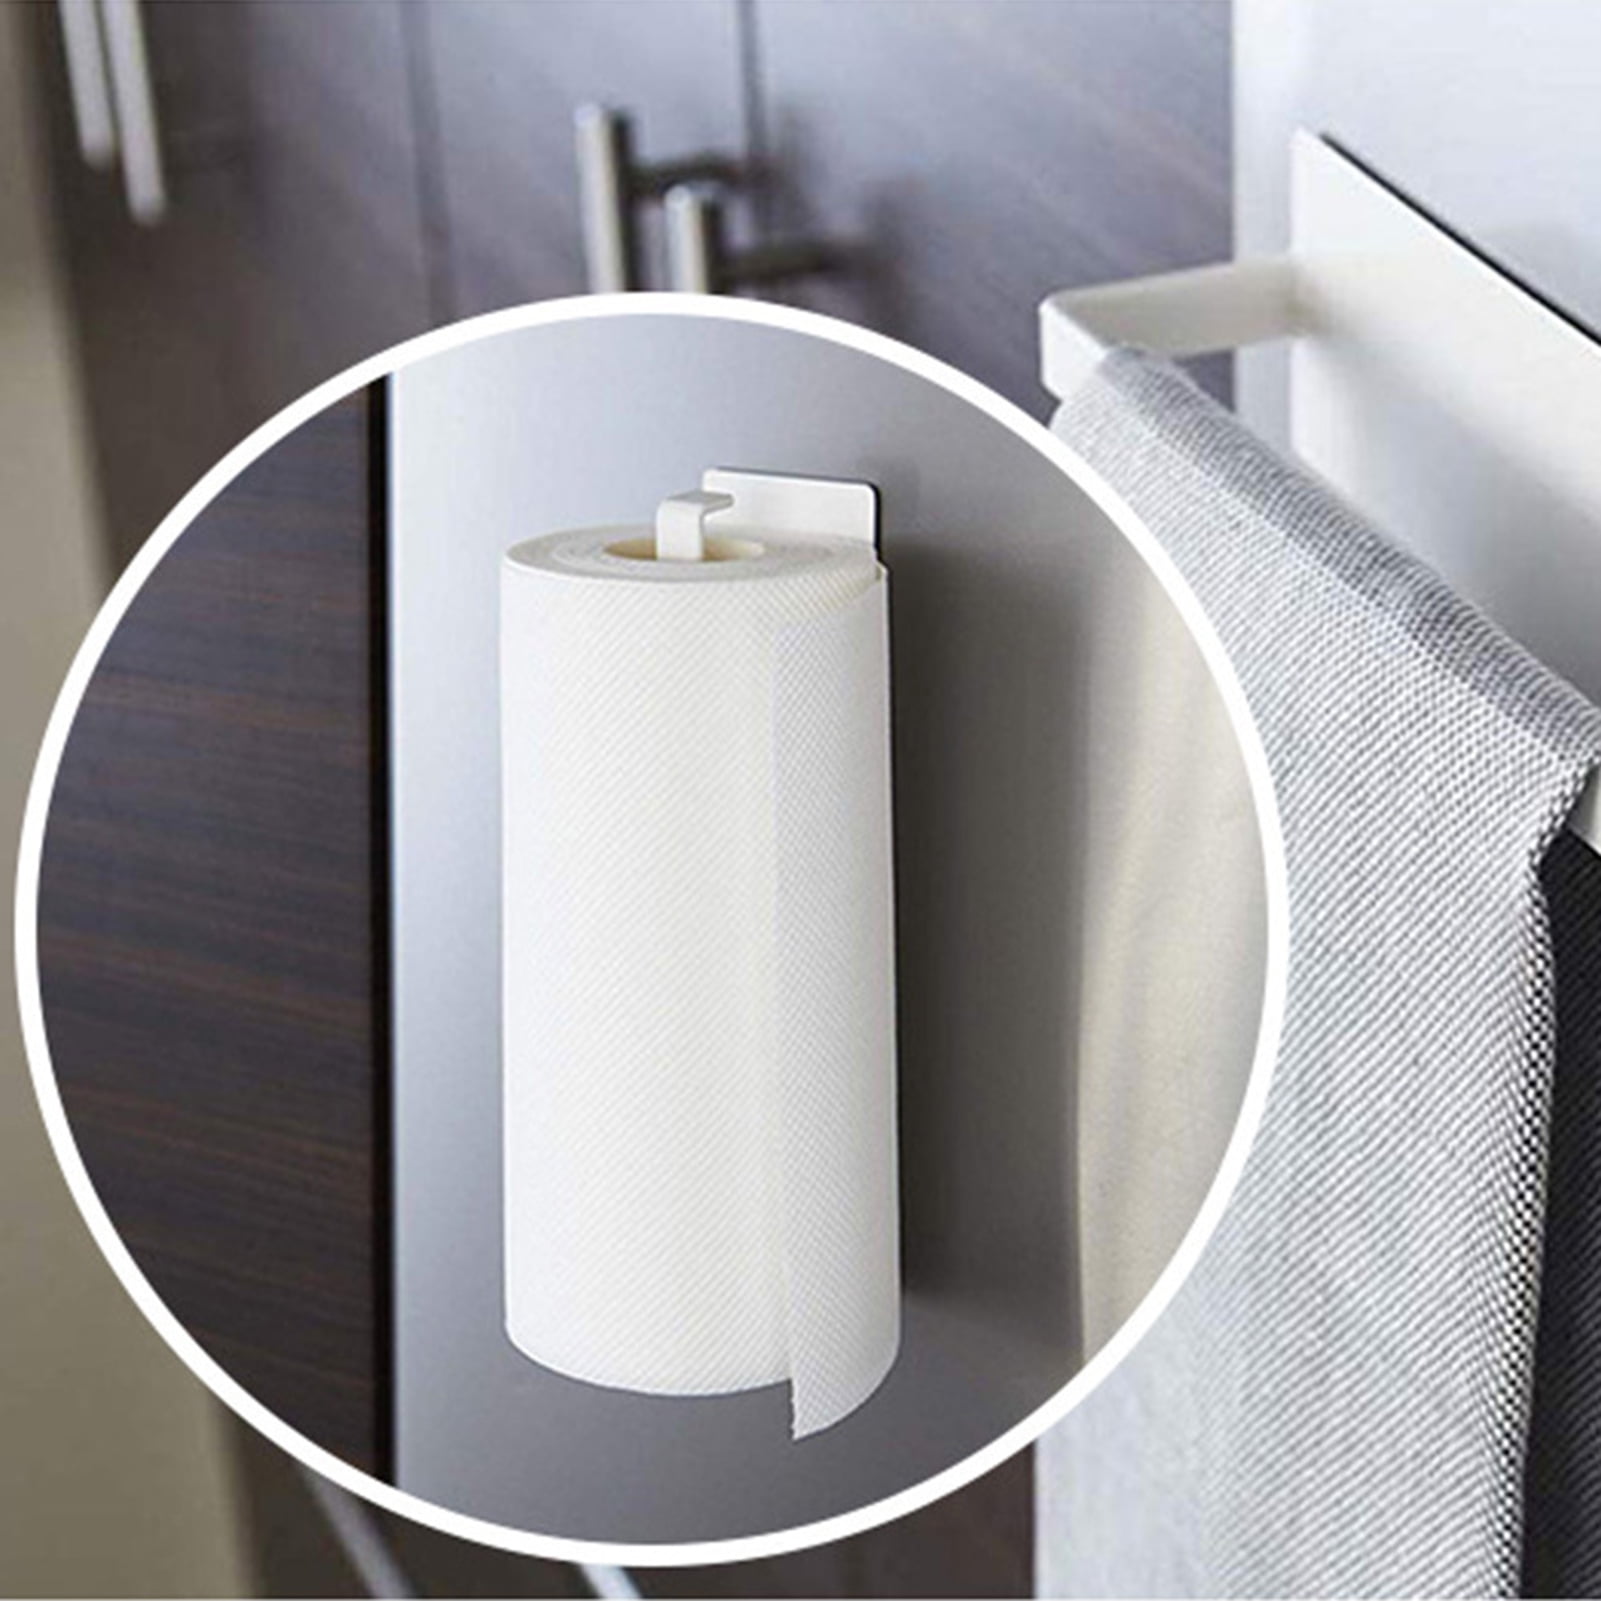 SMARTAKE Standing Paper Towel Holder, Damping Ratchet Design Paper Towel  Organizer, Rustproof Toilet Paper Holder